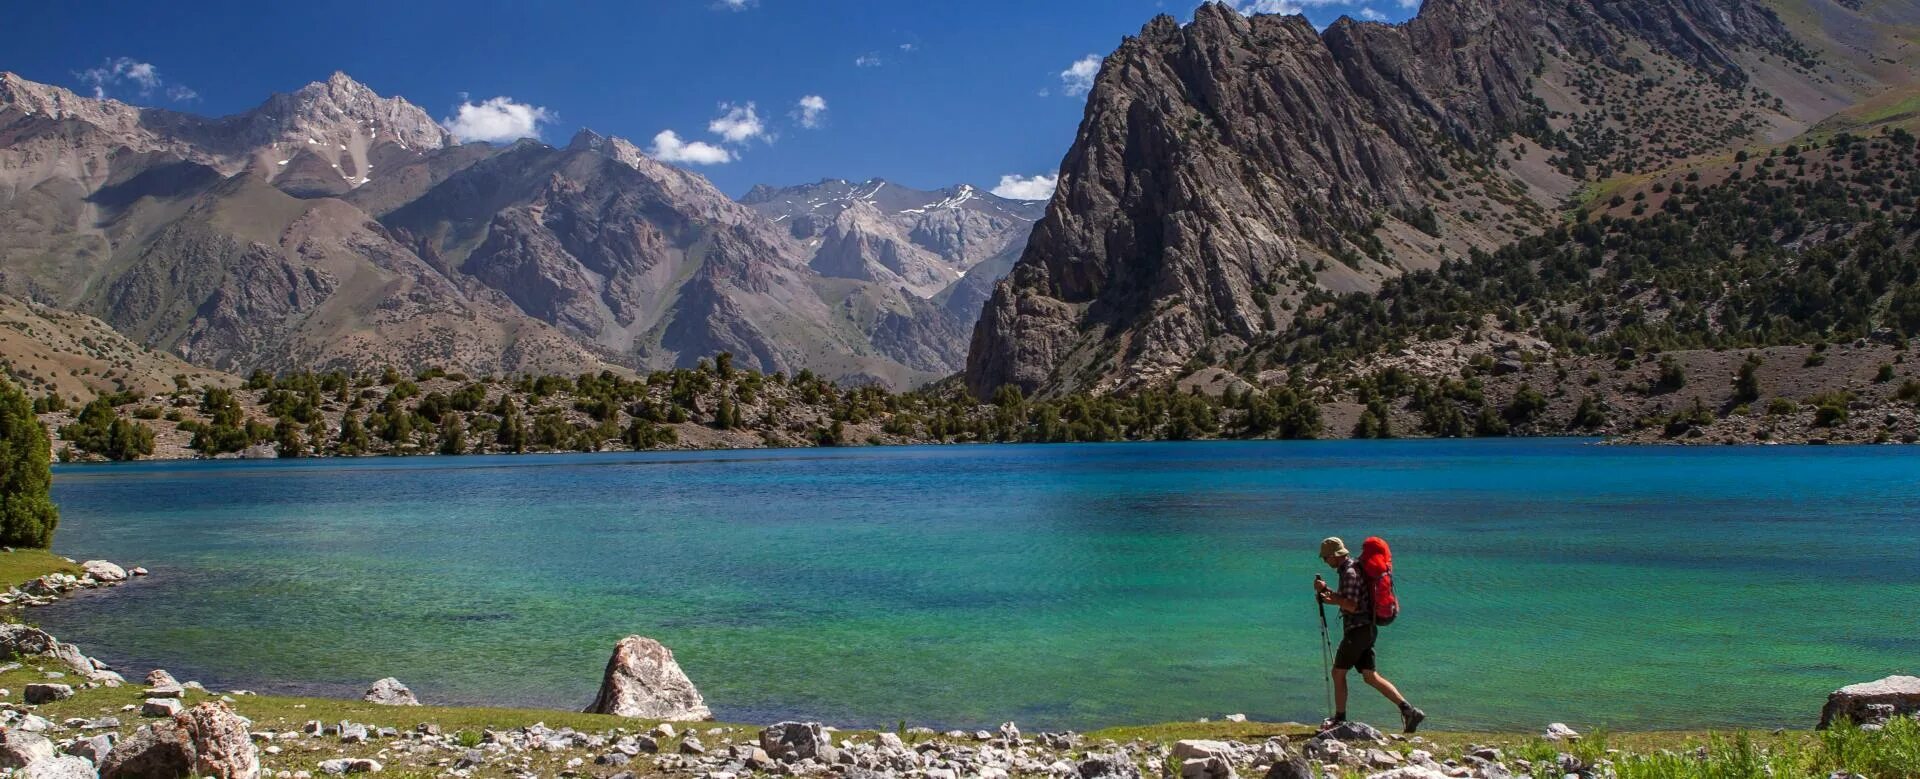 Таджикистан туризм. Туристы в горах Памира. Экотуризм Таджикистан. Туризм в Таджикистане. Туристическая место Таджикистана Памир.